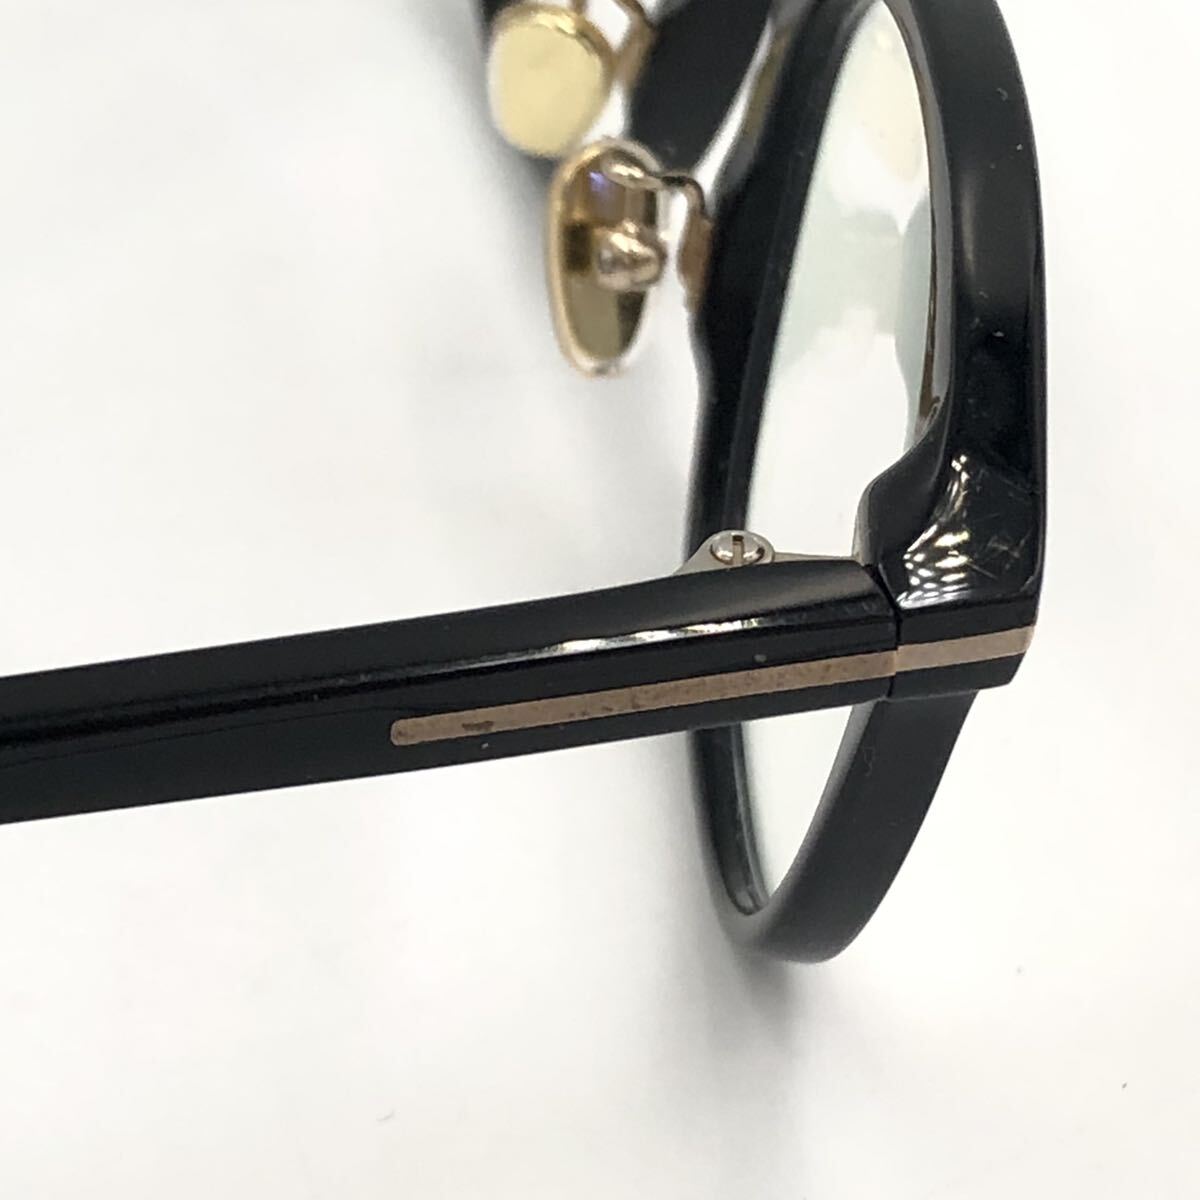 4/24OB-G2375* Tom Ford / sunglasses / glasses frame / glasses / accessory / black color /DH0/EB0